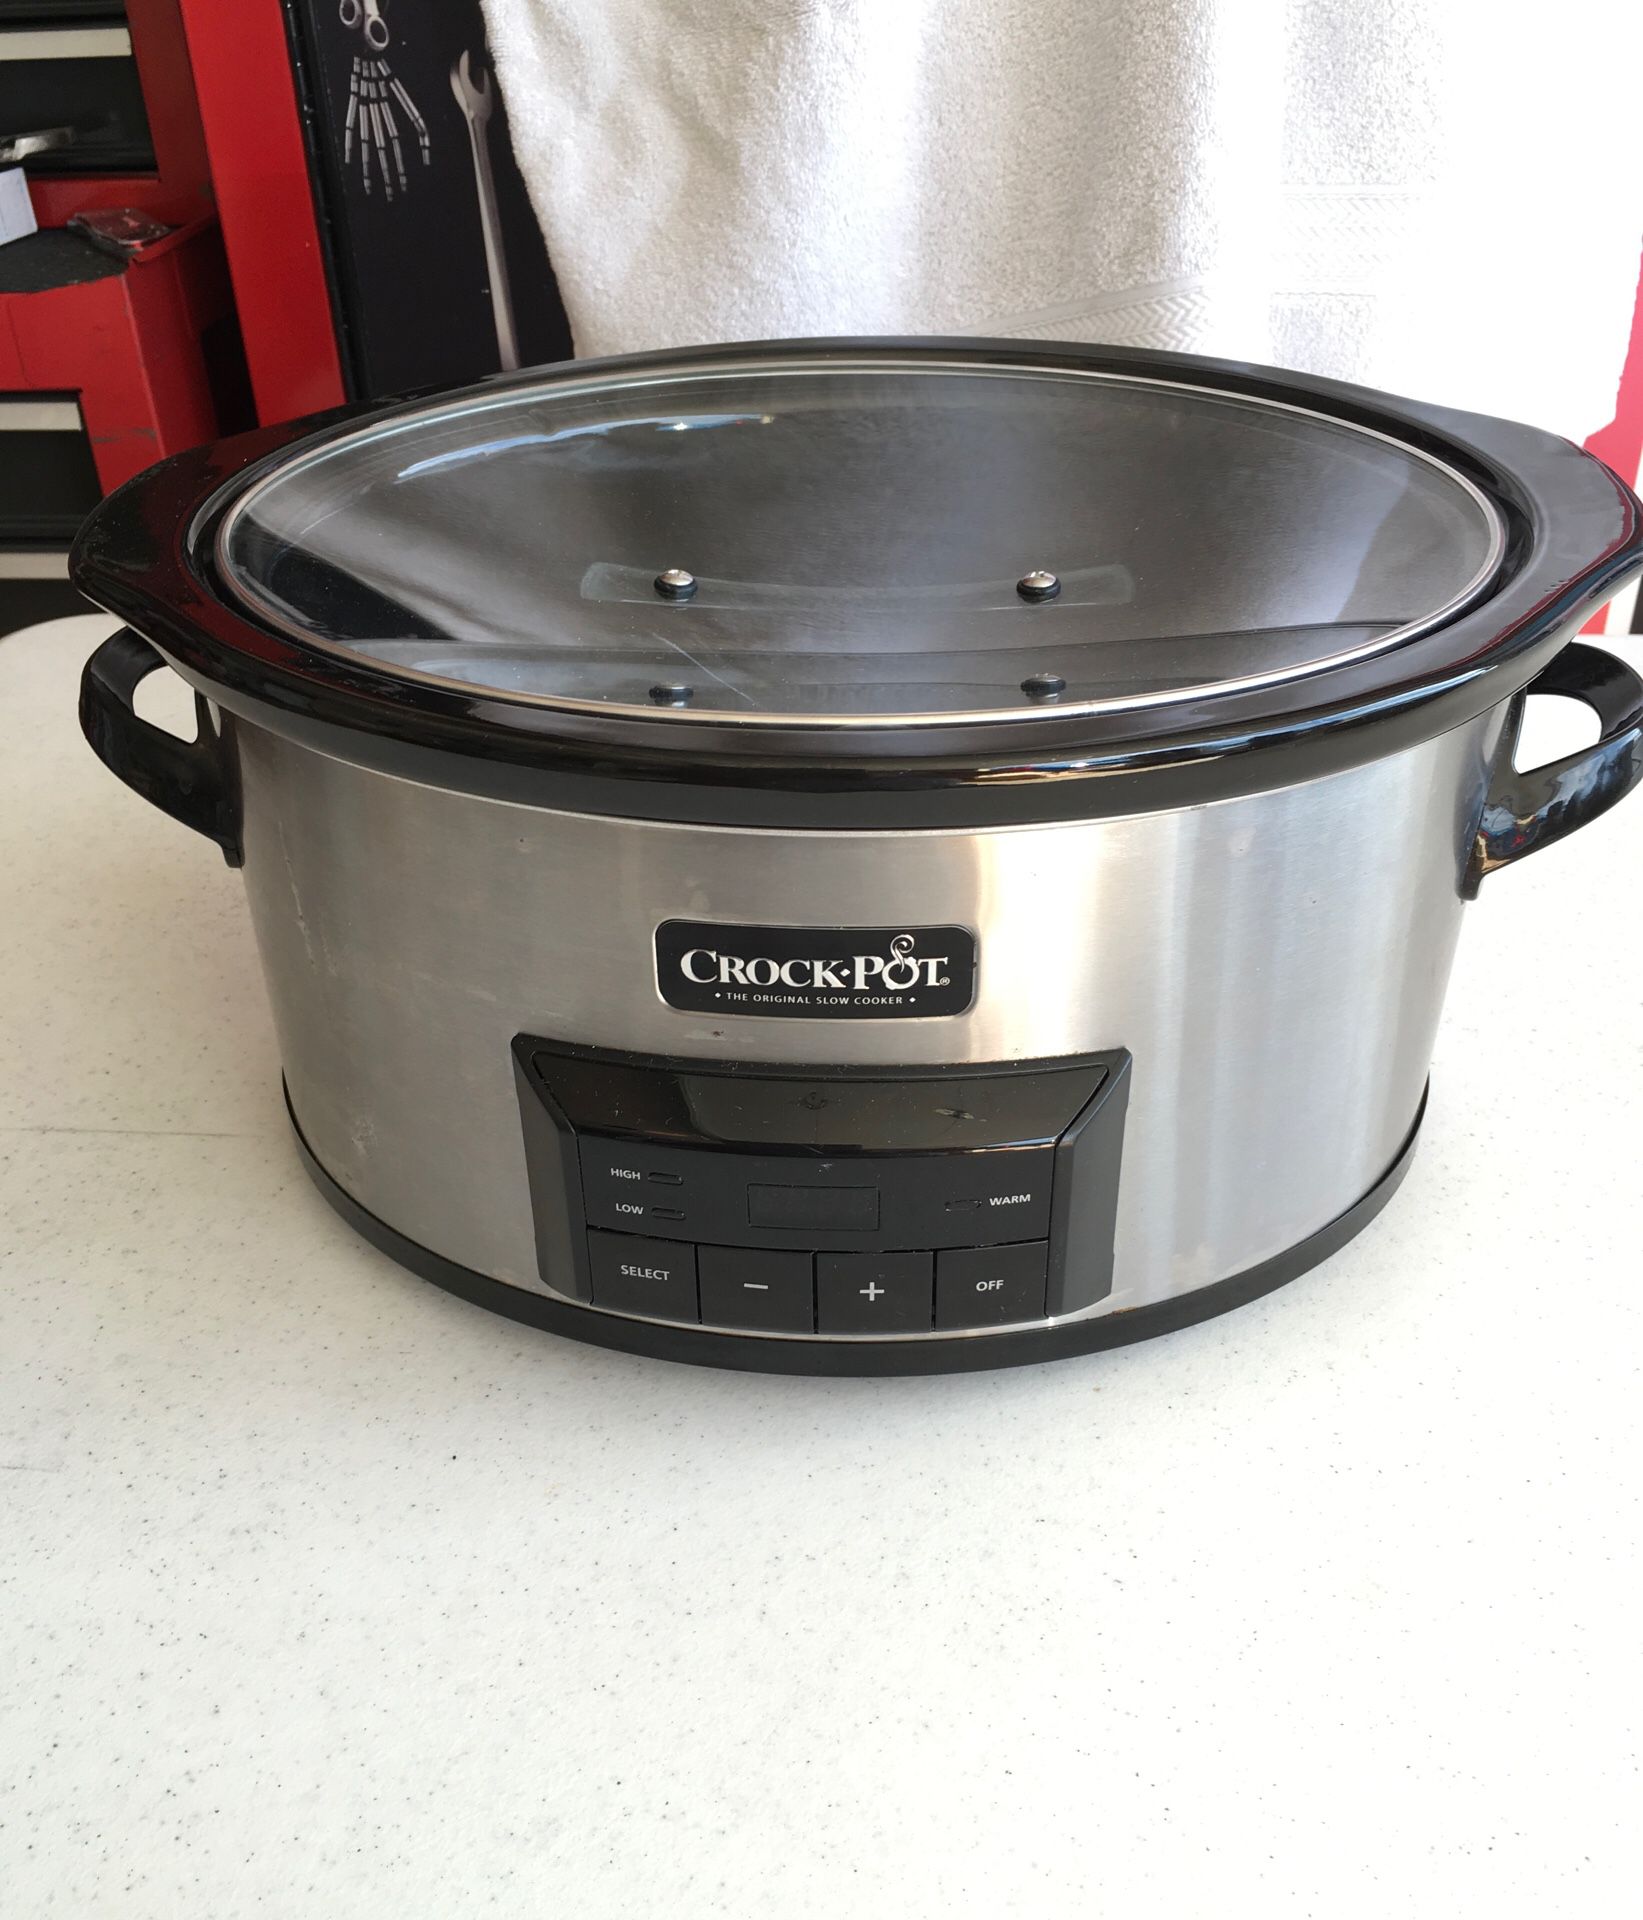 Stainless steel Crock Pot